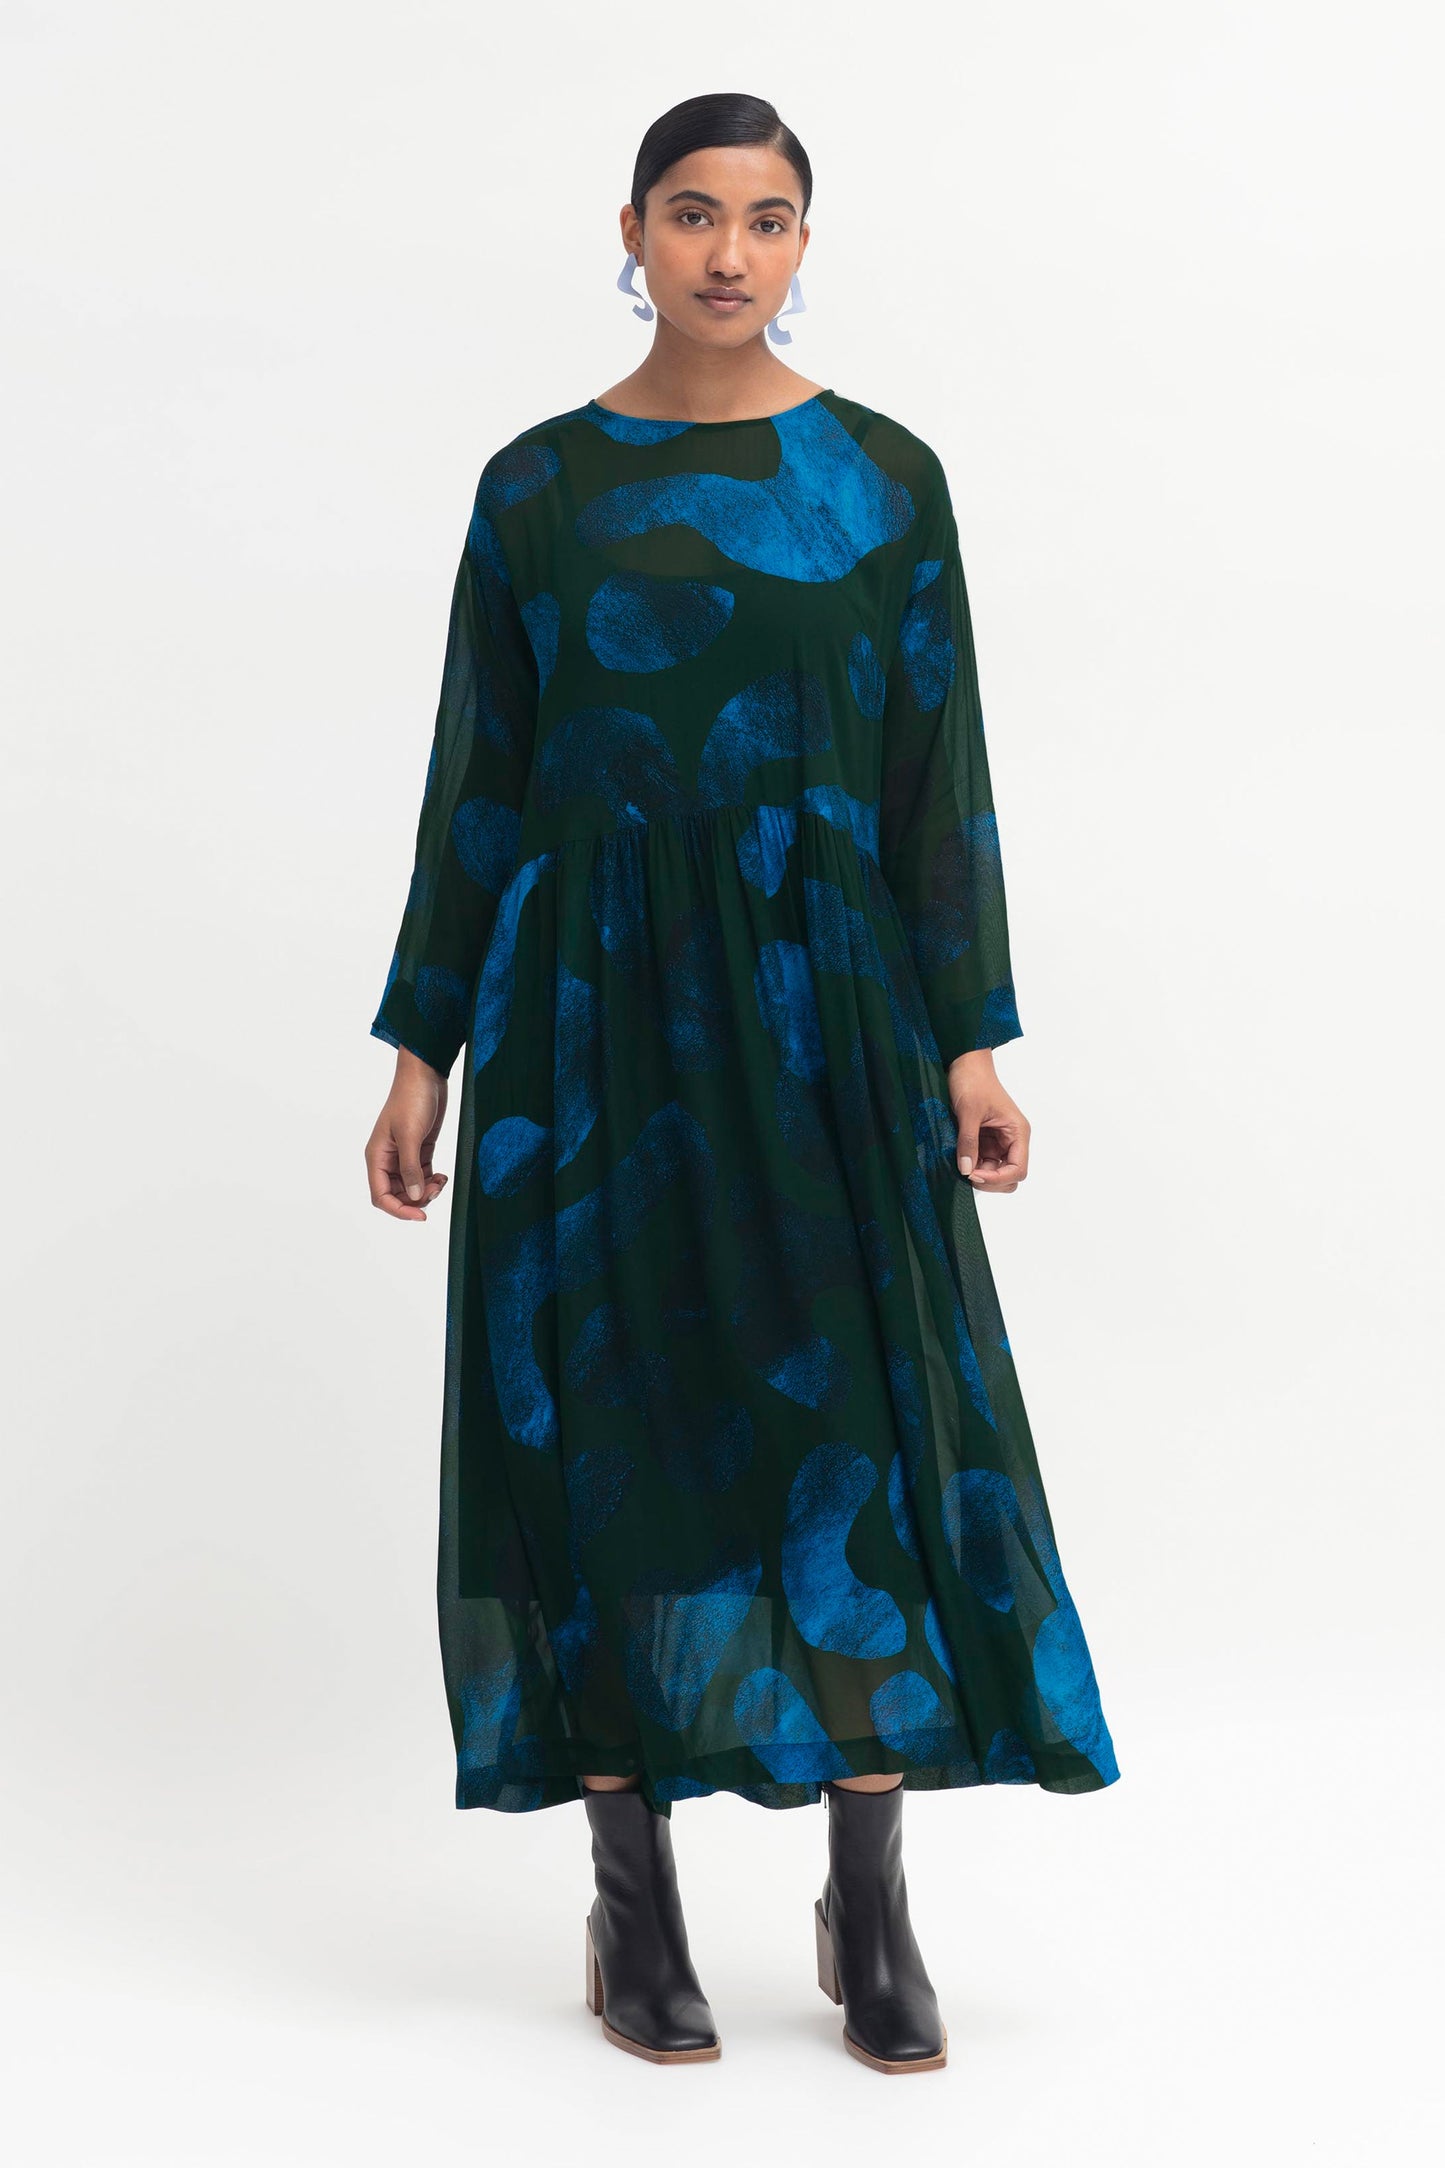 Gira Sheer Long Sleeve Black and Blue Print Dress with Slip Model Front | ANIMAL PRINT